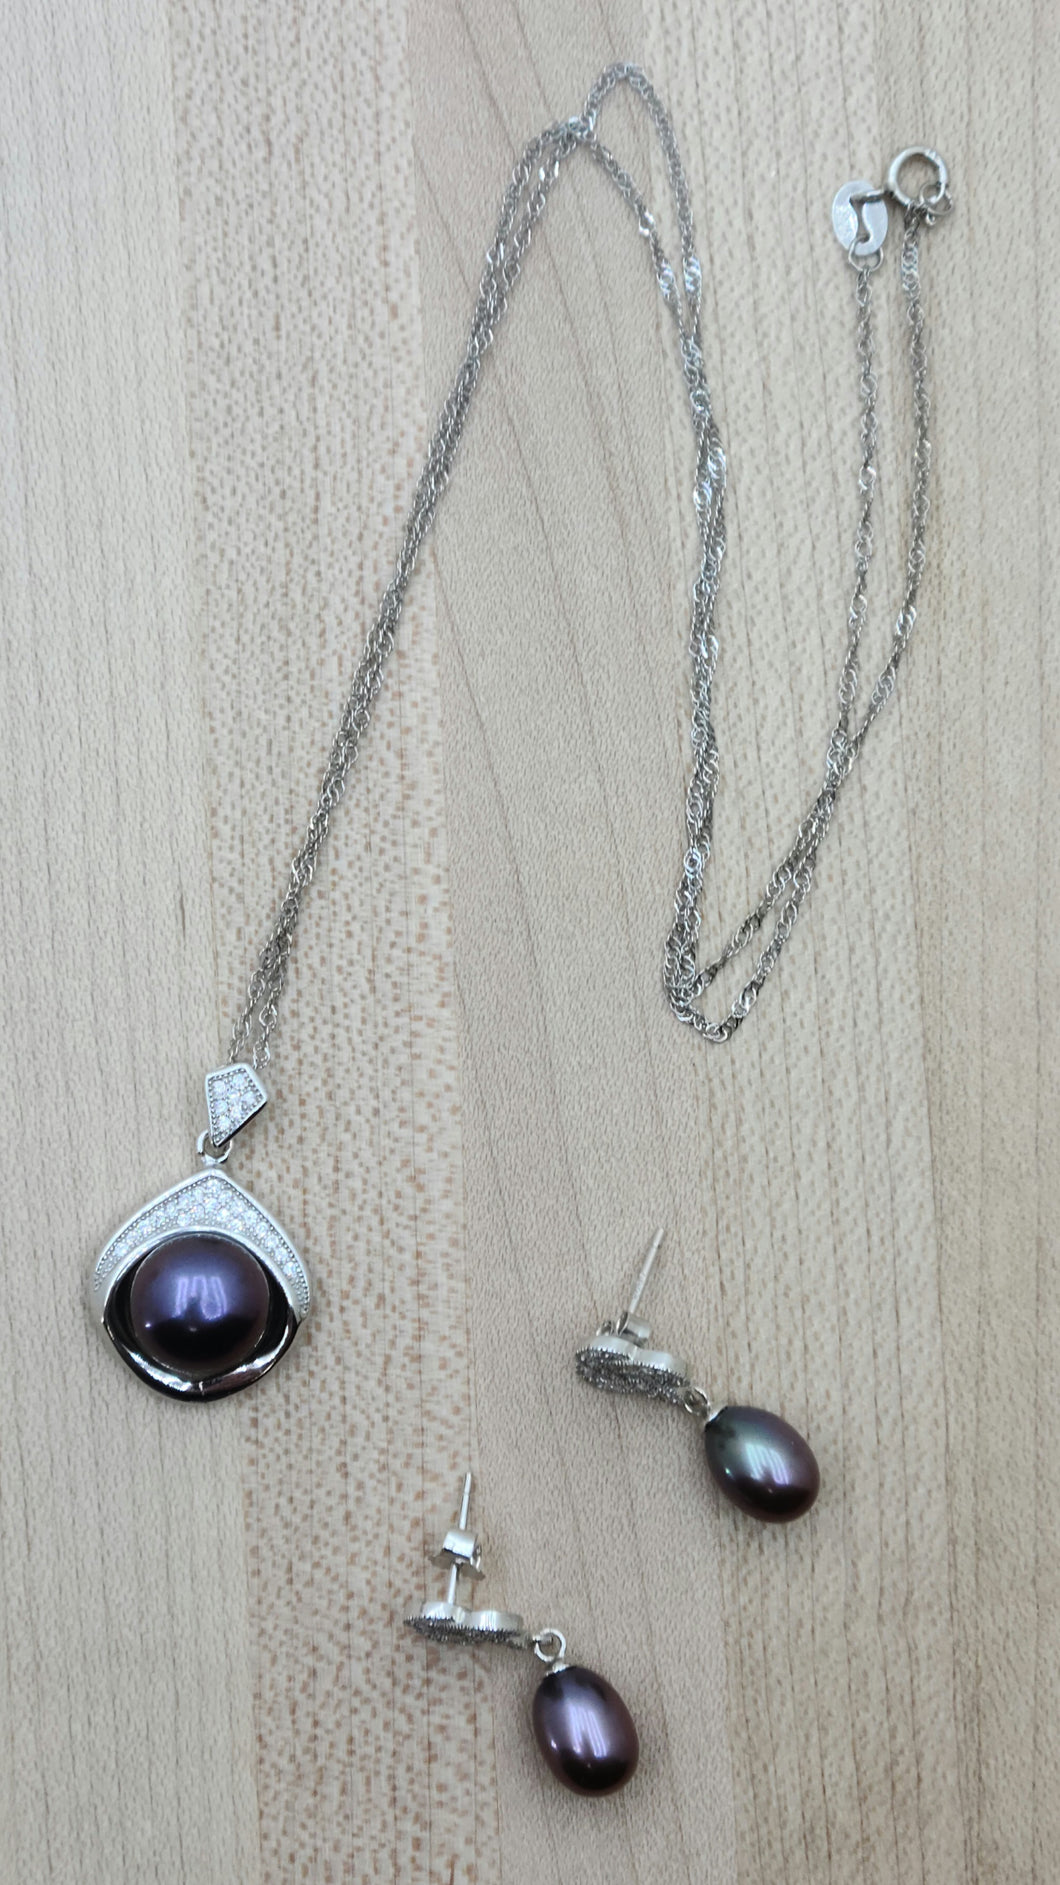 'Black' Pearl Necklace & Earrings